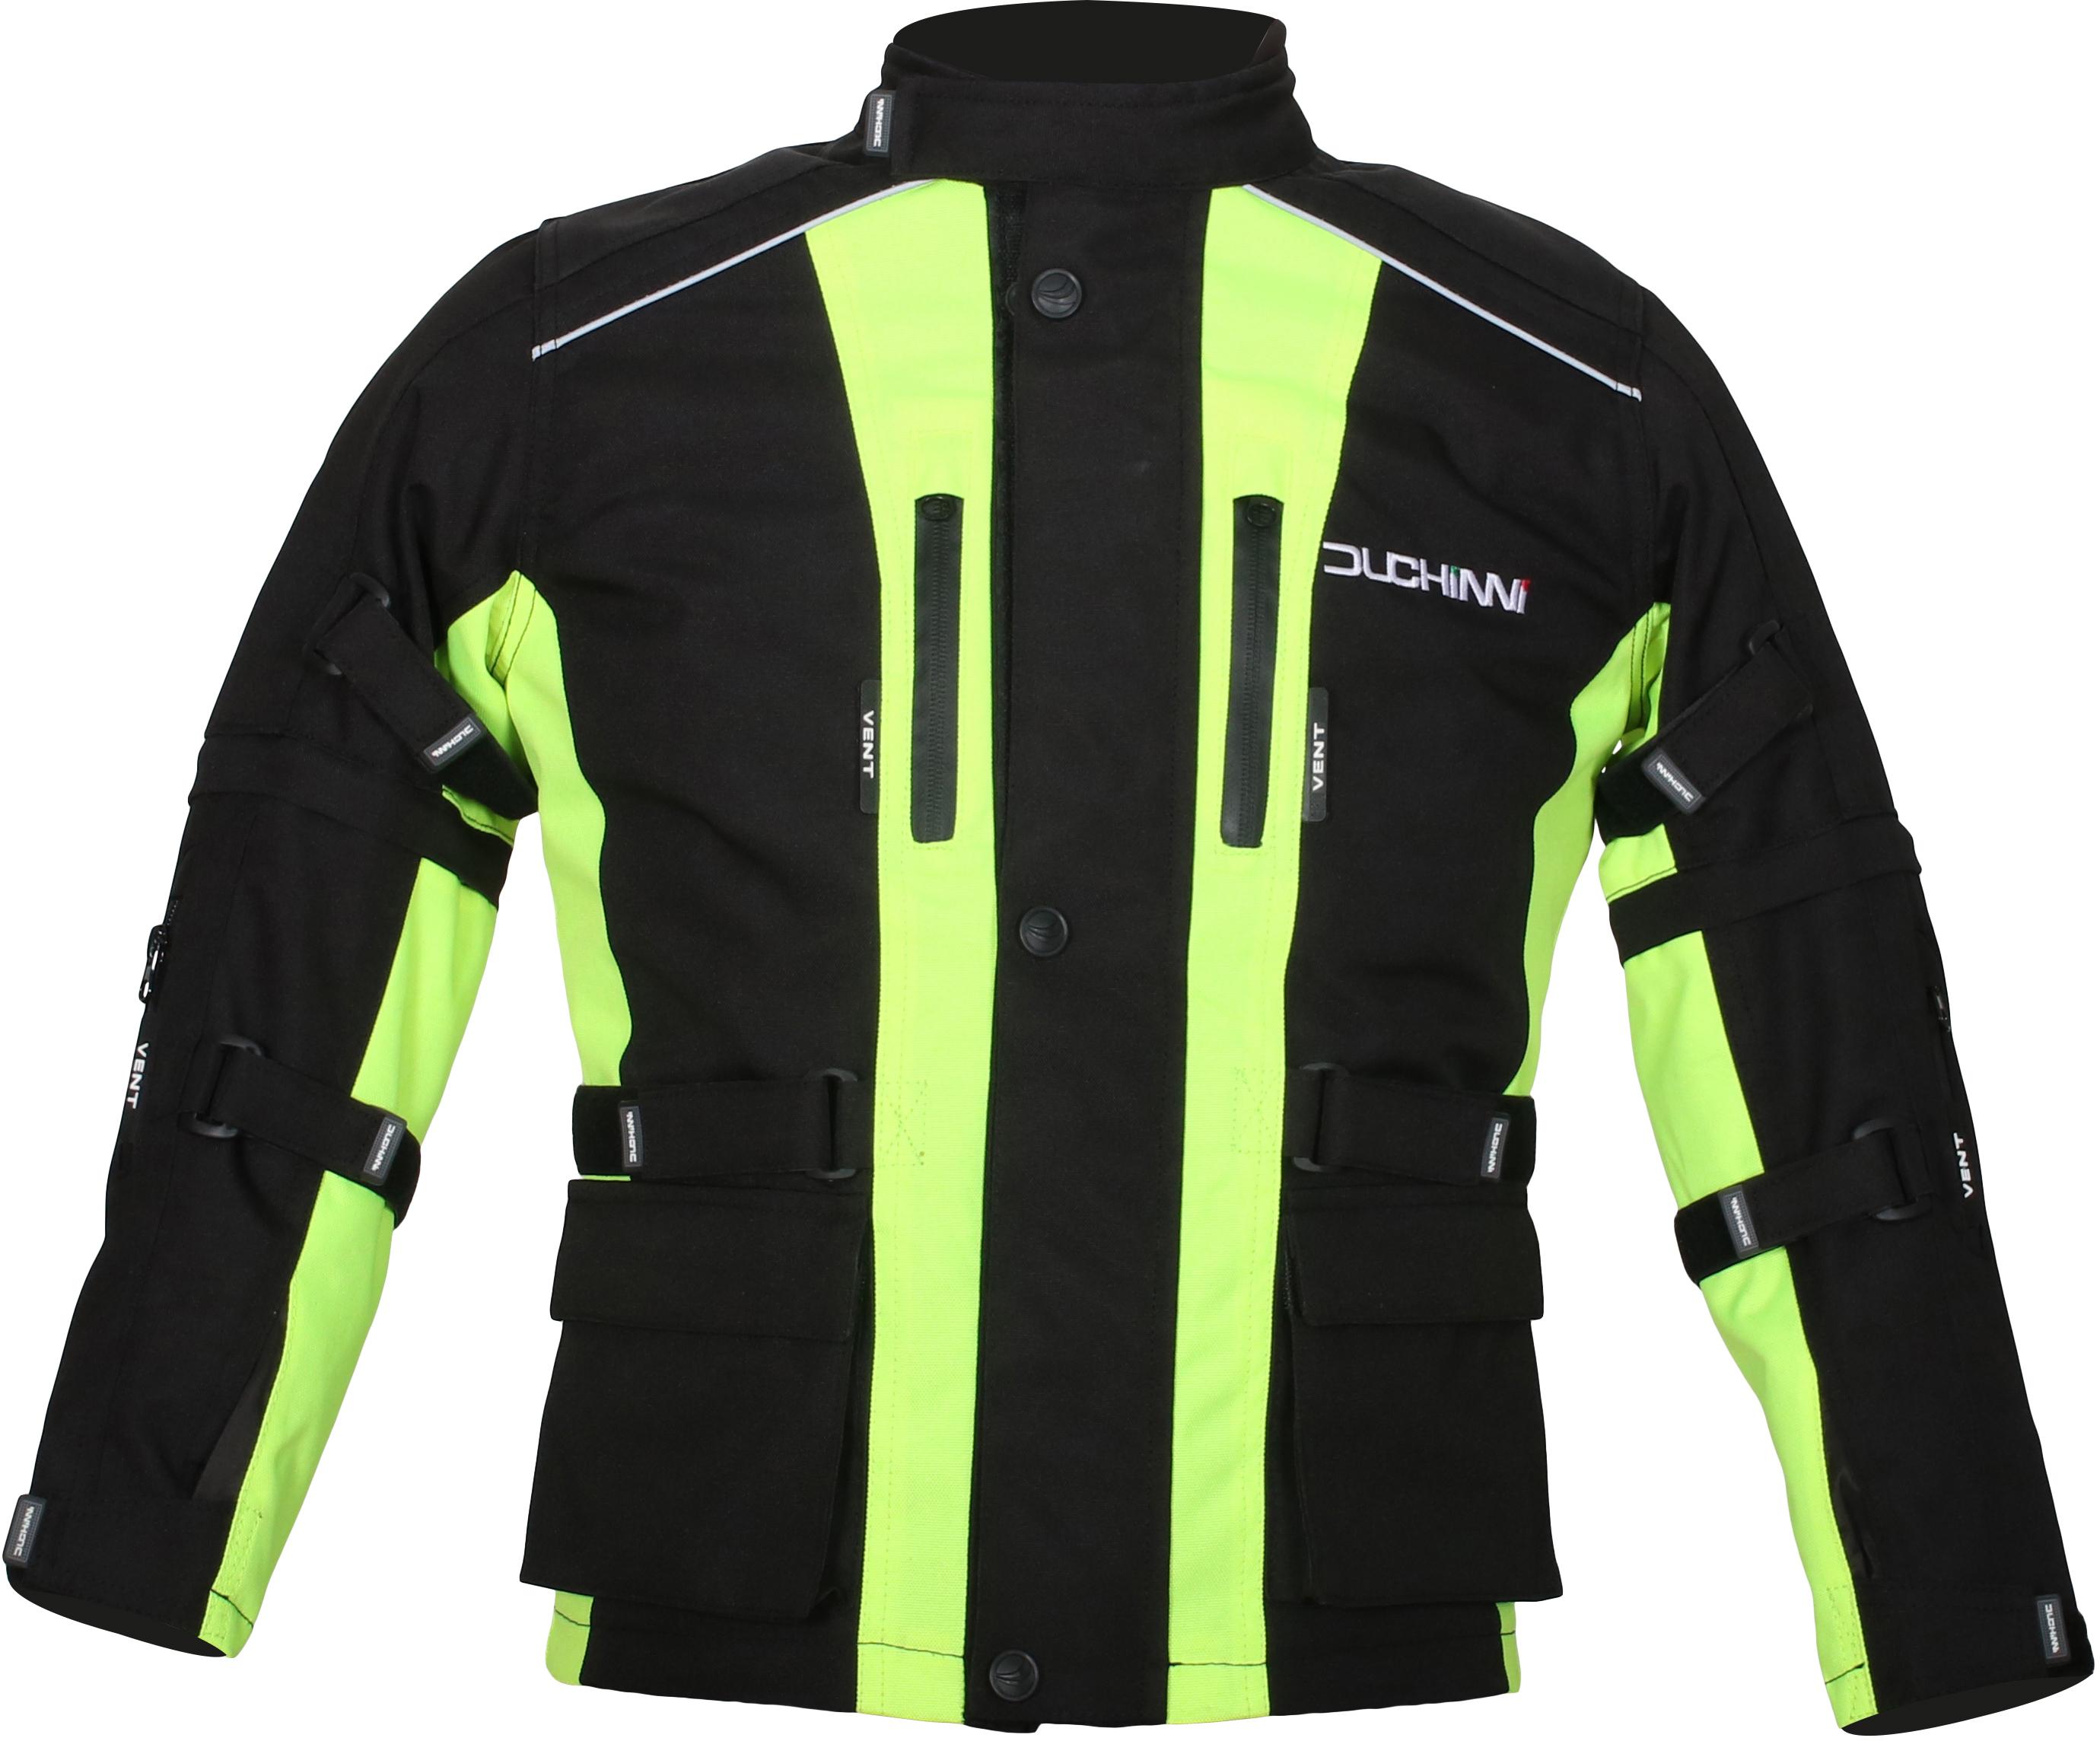 Duchinni Jago Youth Motorcycle Jacket - Black And Neon, Xl